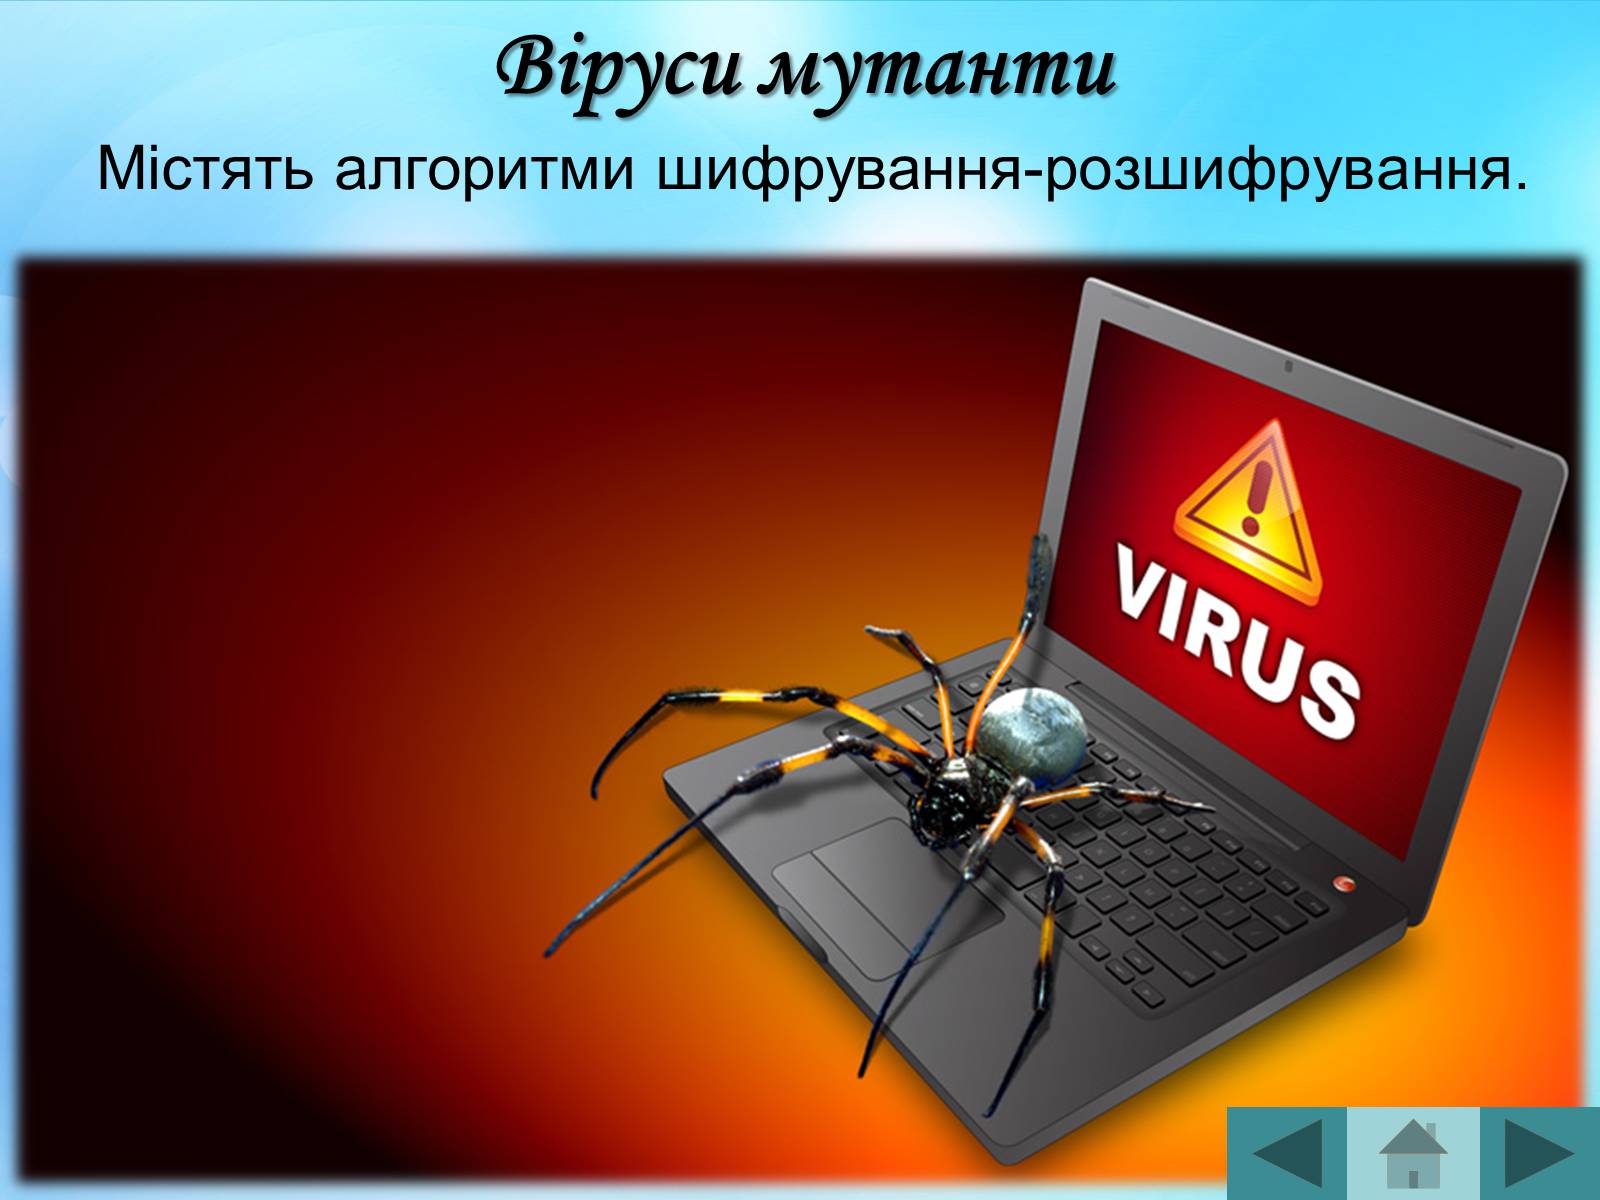 Virus pc. Компьютерные вирусы. Компьютерные вирусы фото. Вирус на компьютере. Опасные вирусы компьютера.